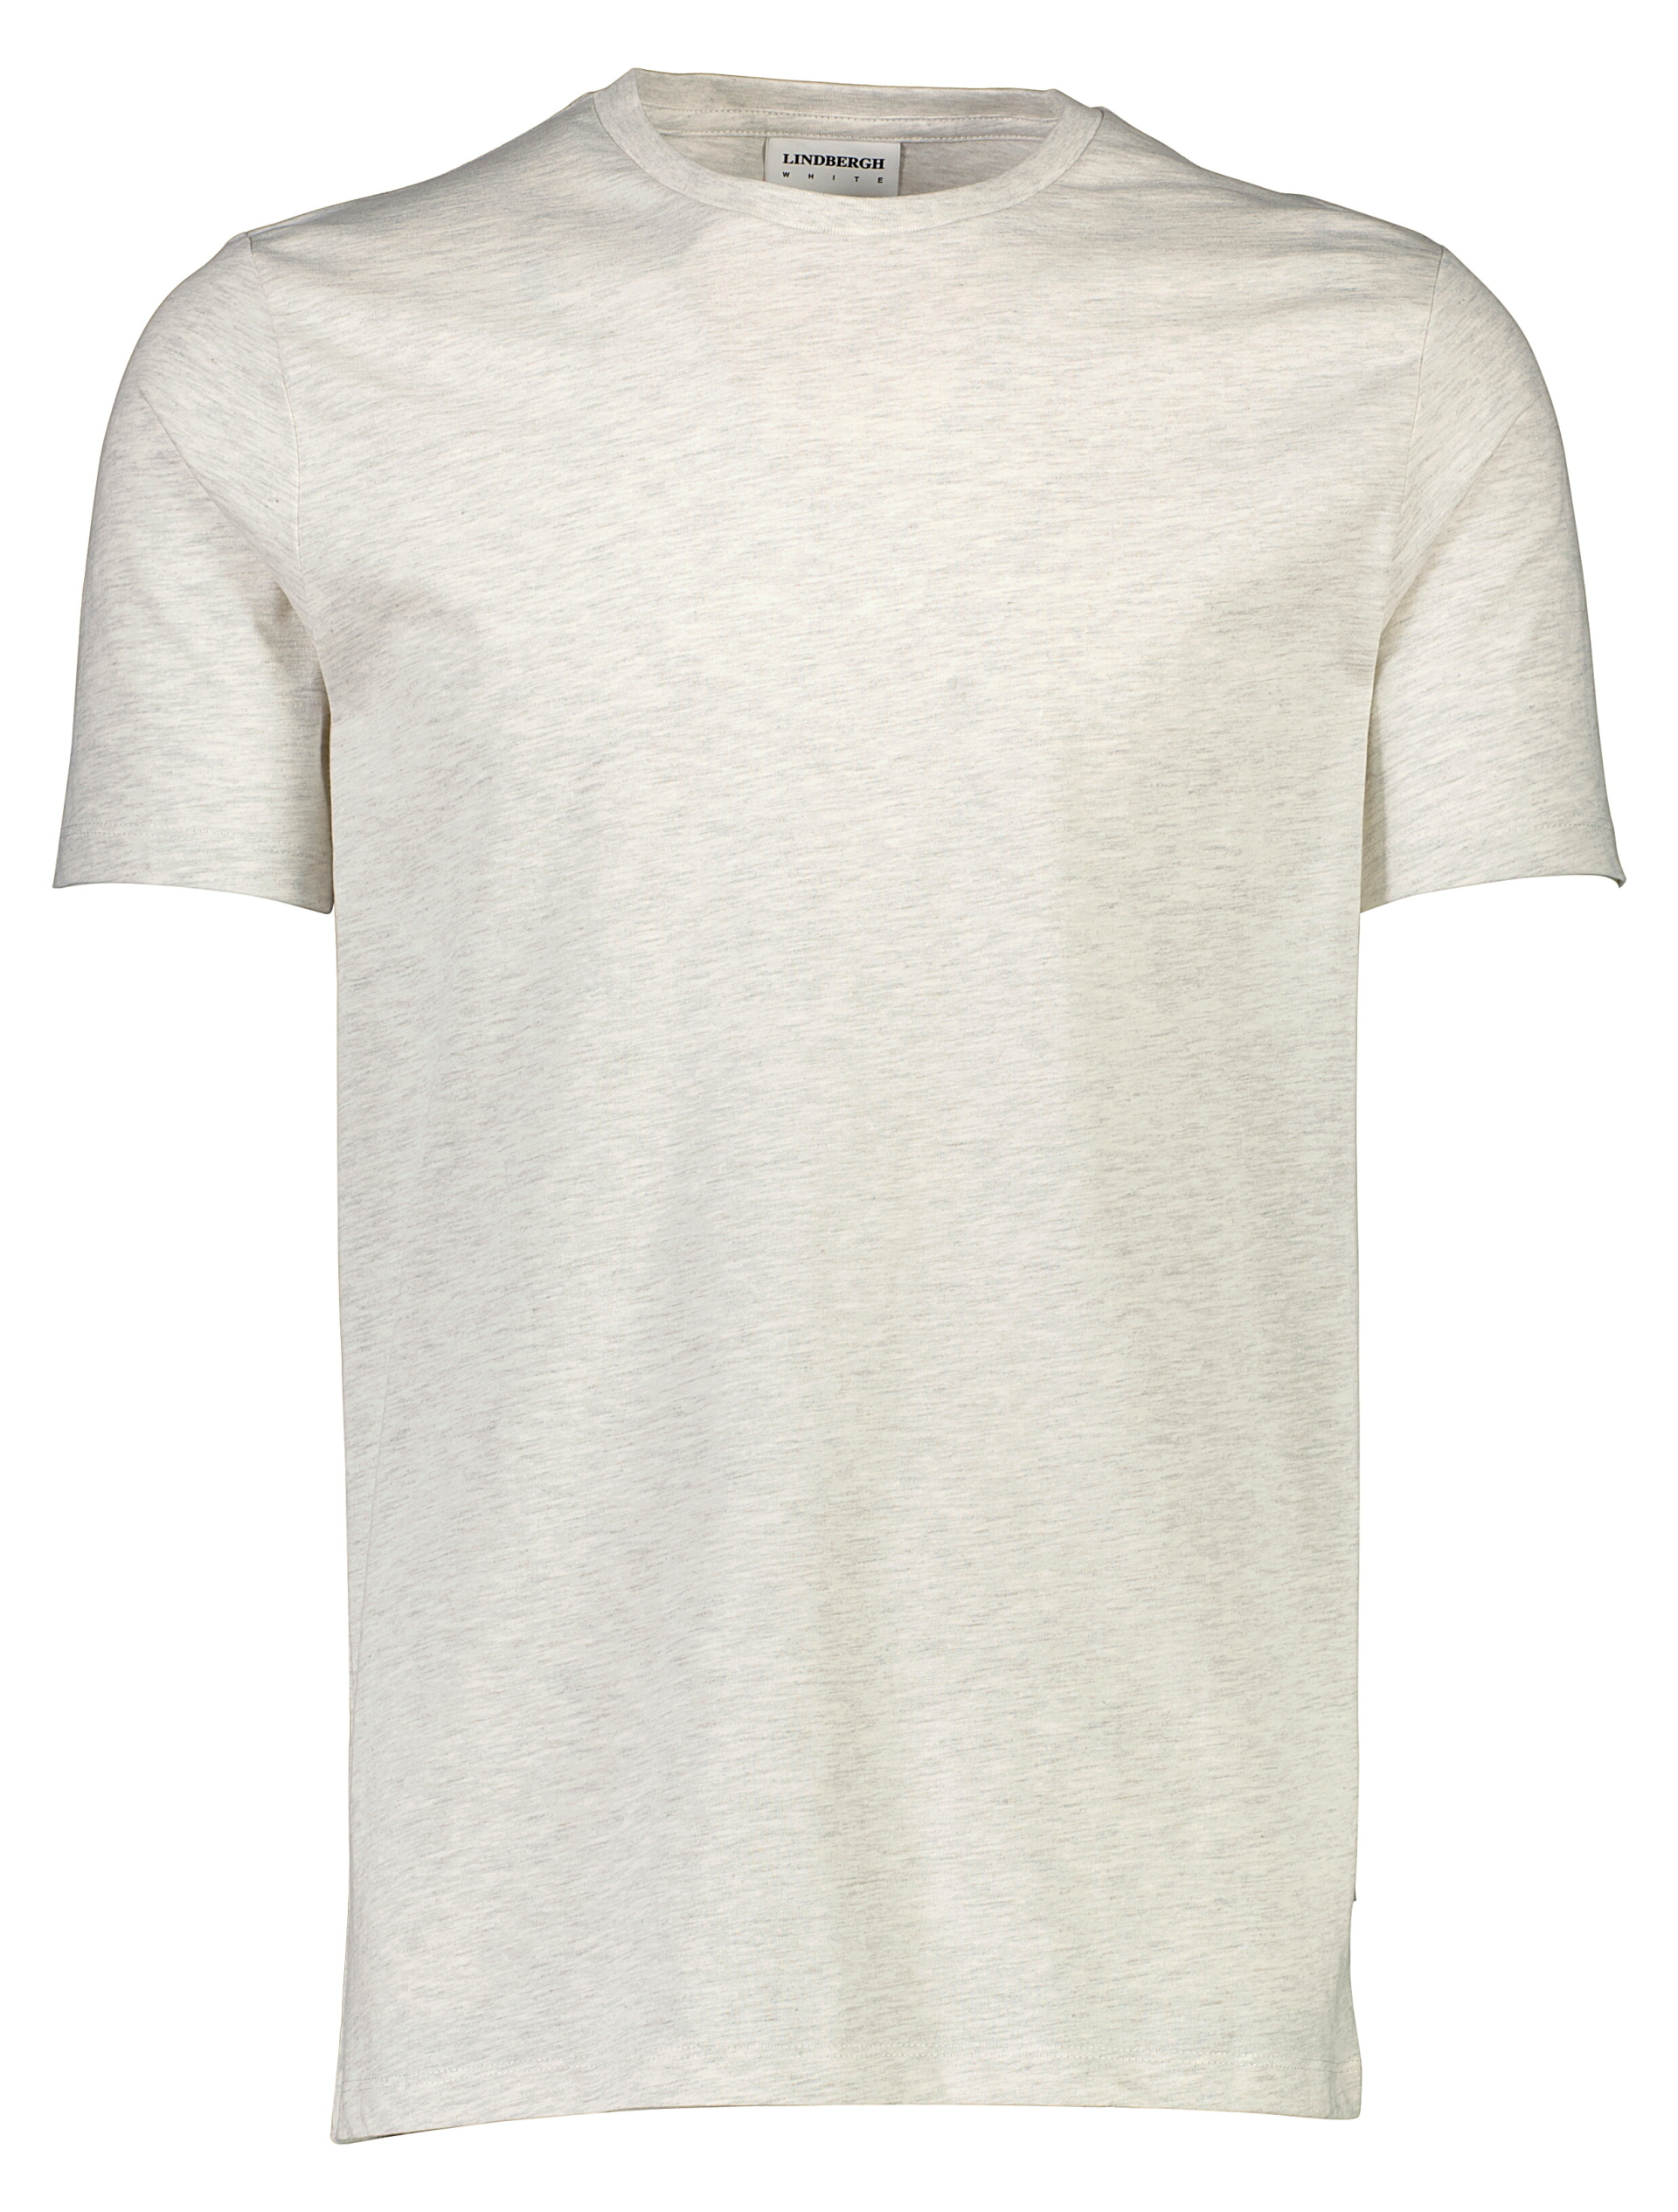 Lindbergh T-shirt hvid / off white mel